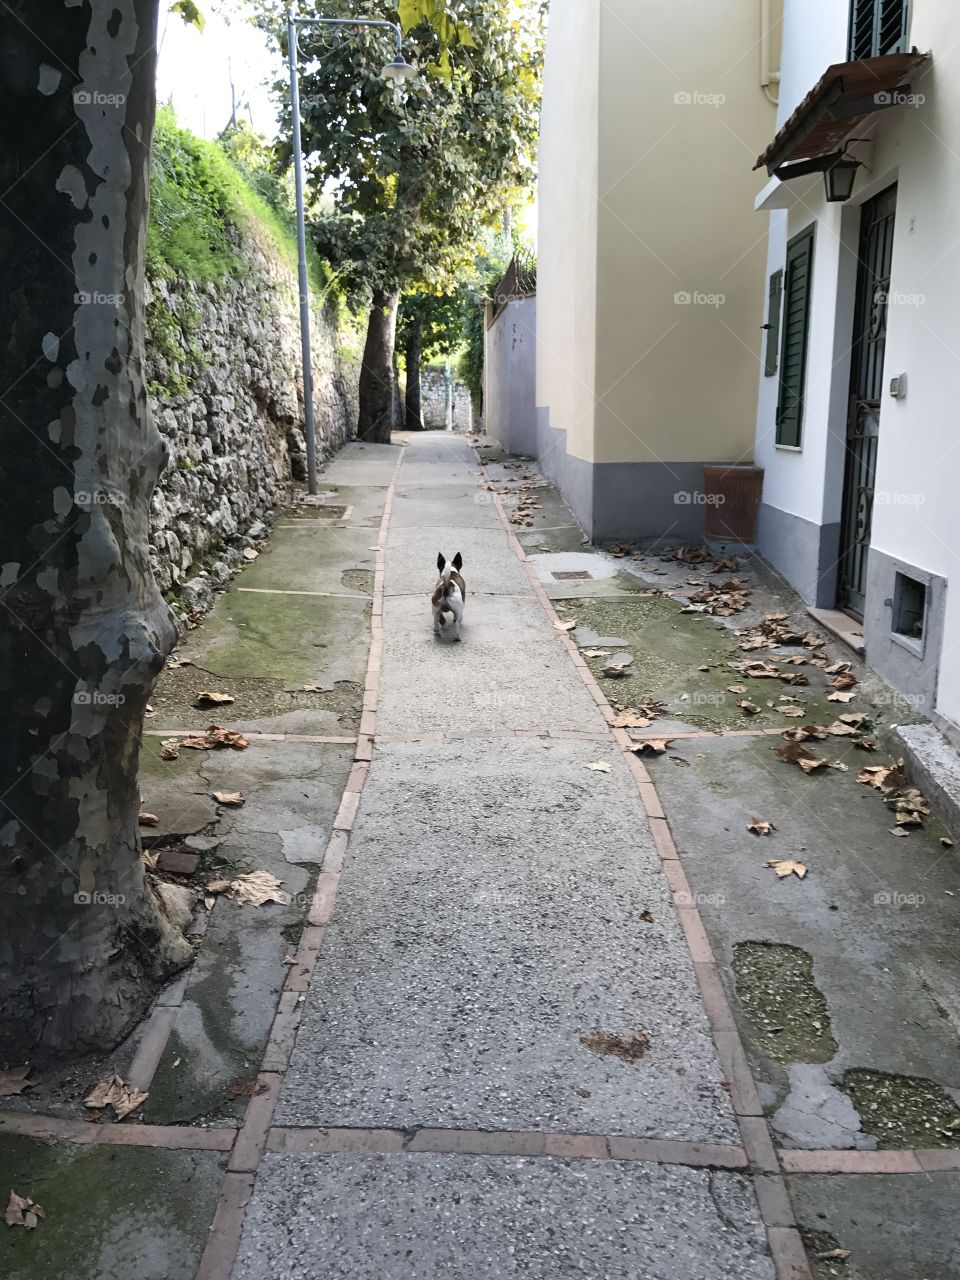 Dog walks away